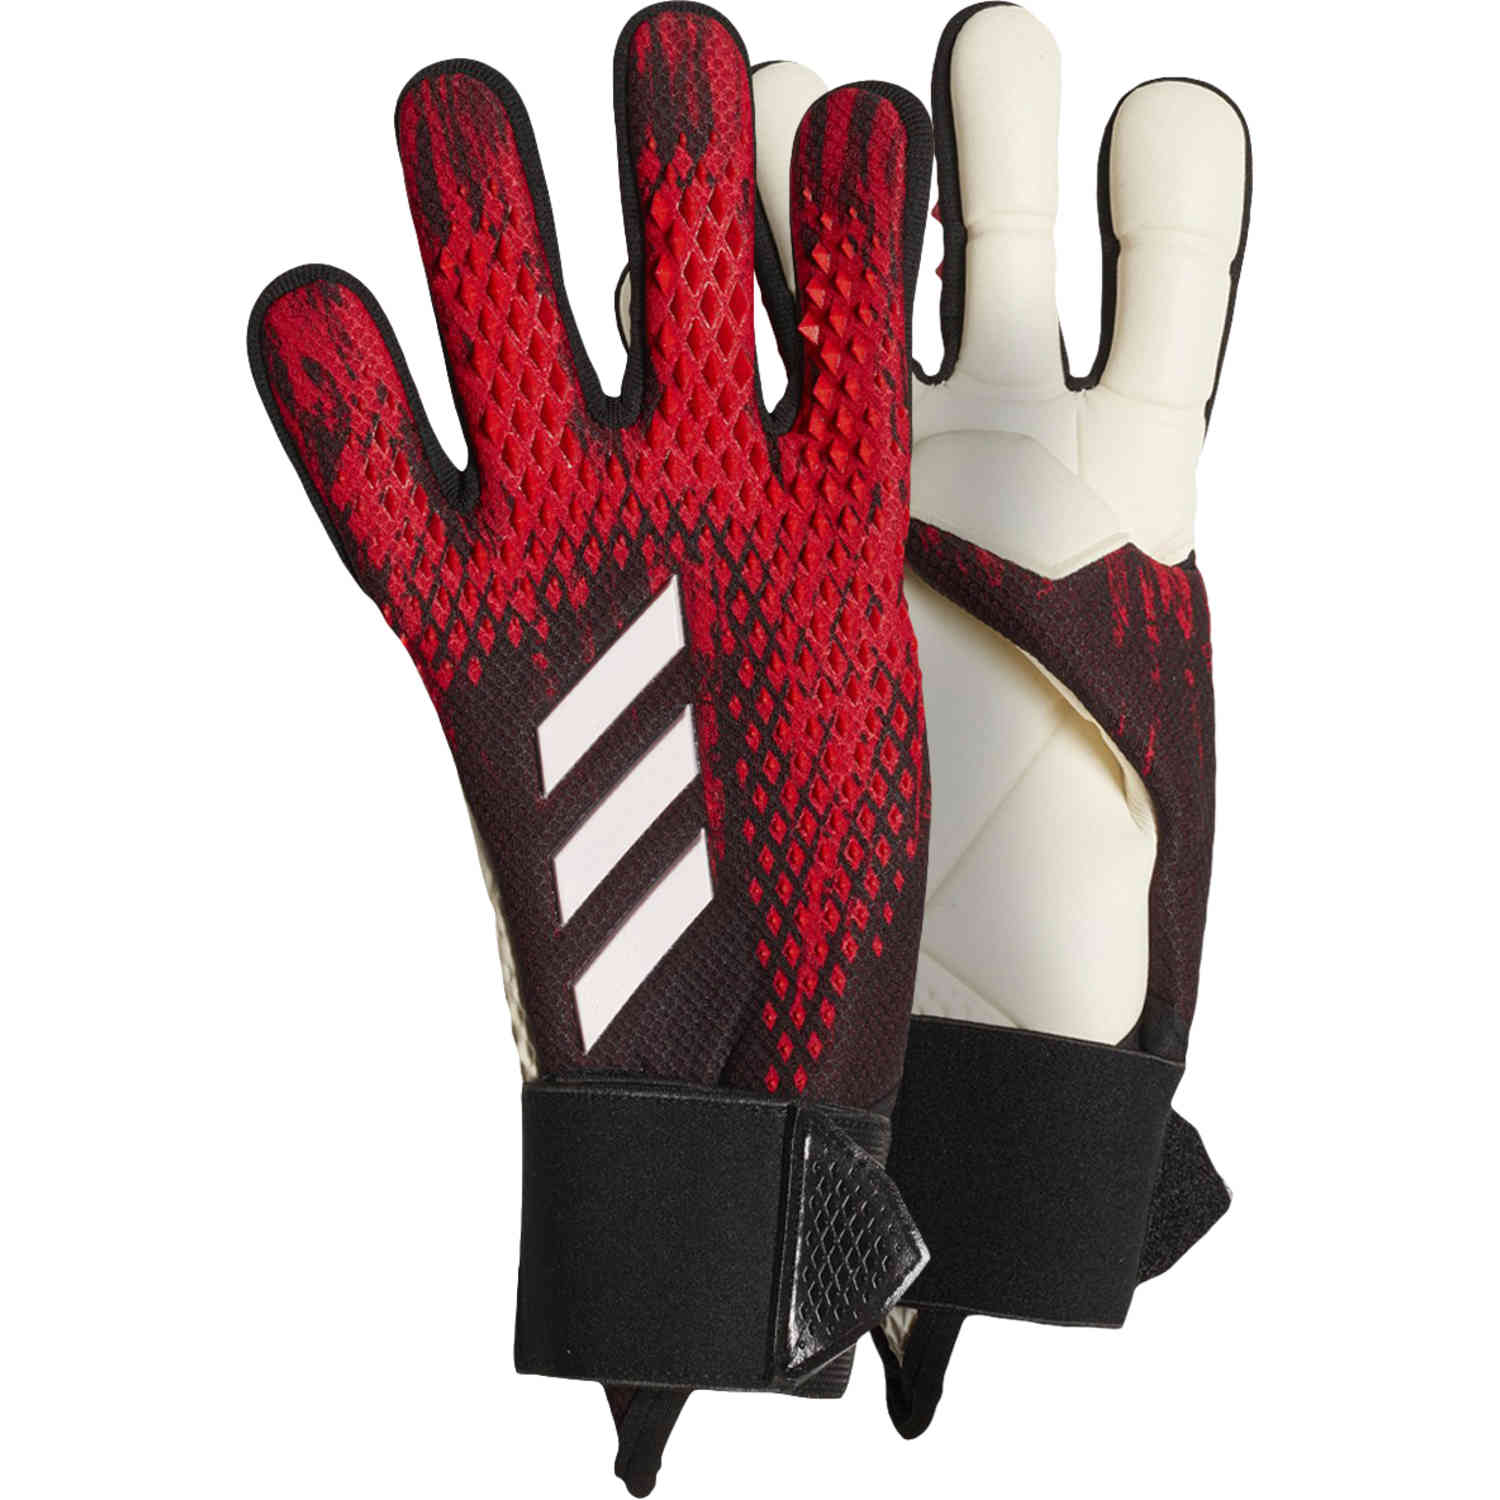 adidas nemeziz goalkeeper gloves